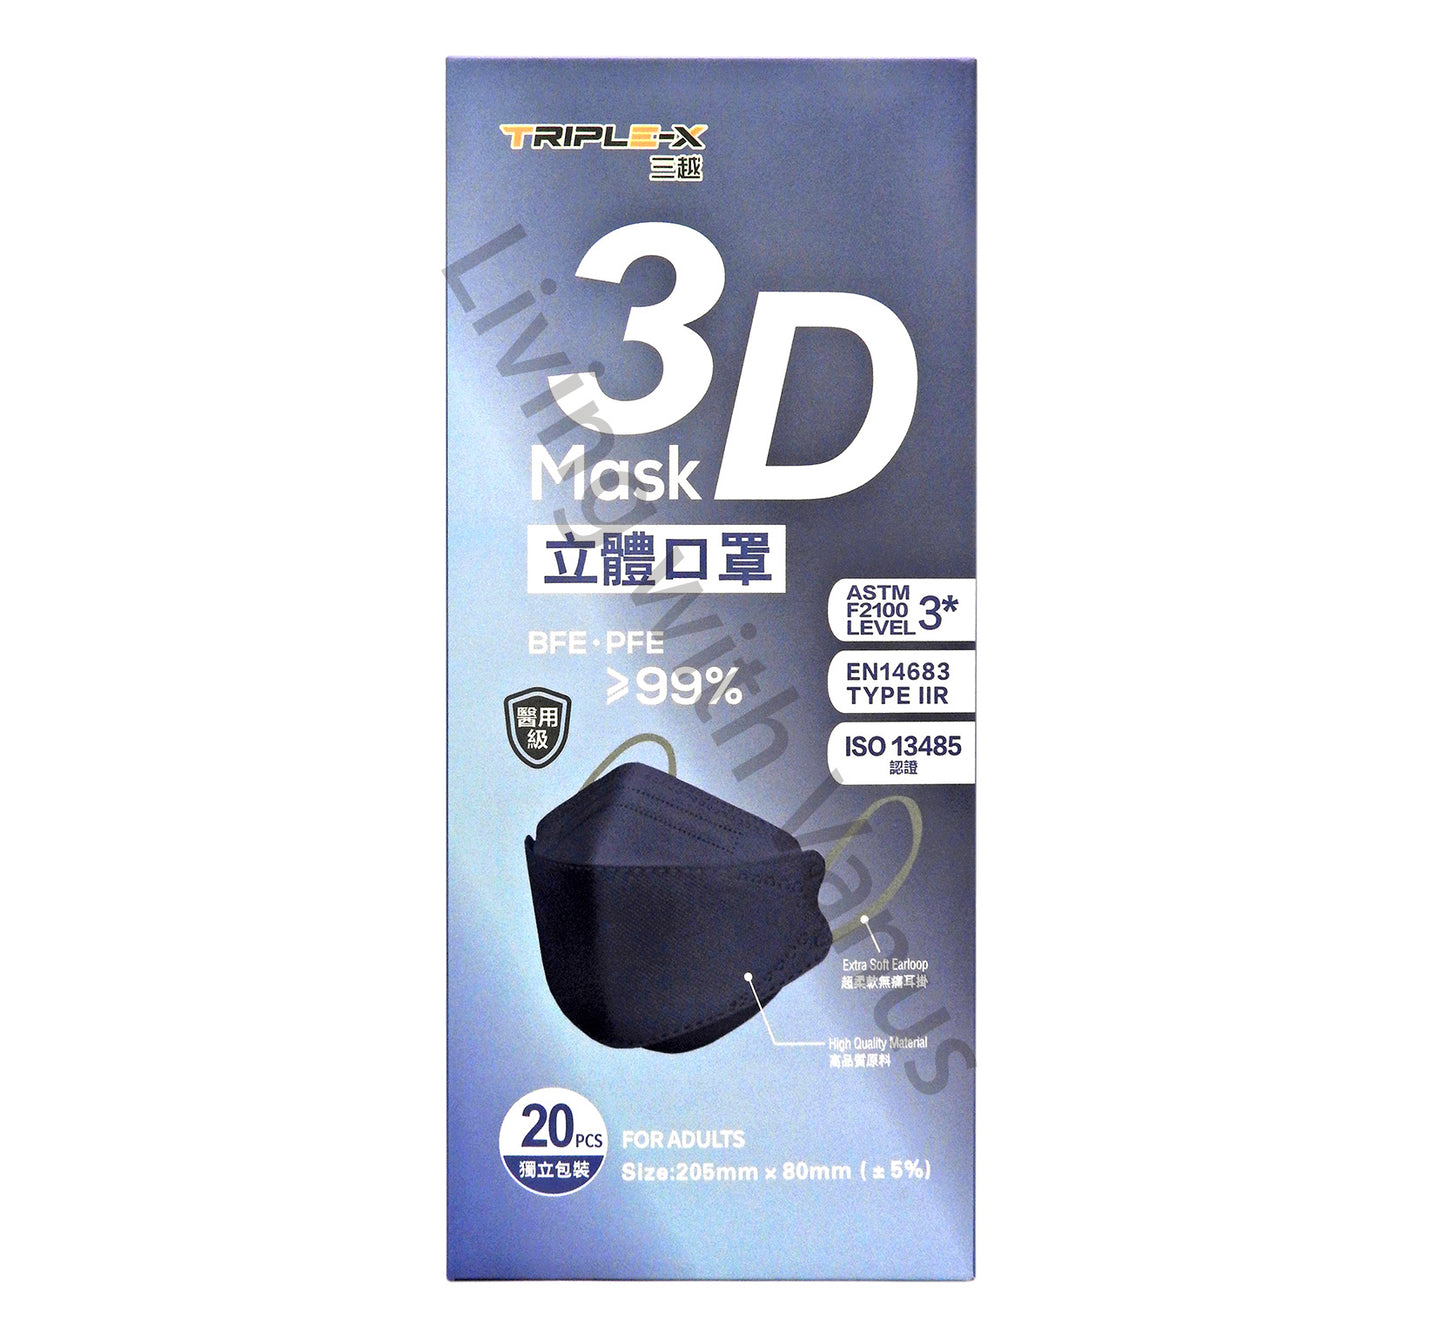 Triple-X 三越 - 3D Mask 立體口罩 (星塵藍) 20Pcs [獨立包裝 individual pack] #48098